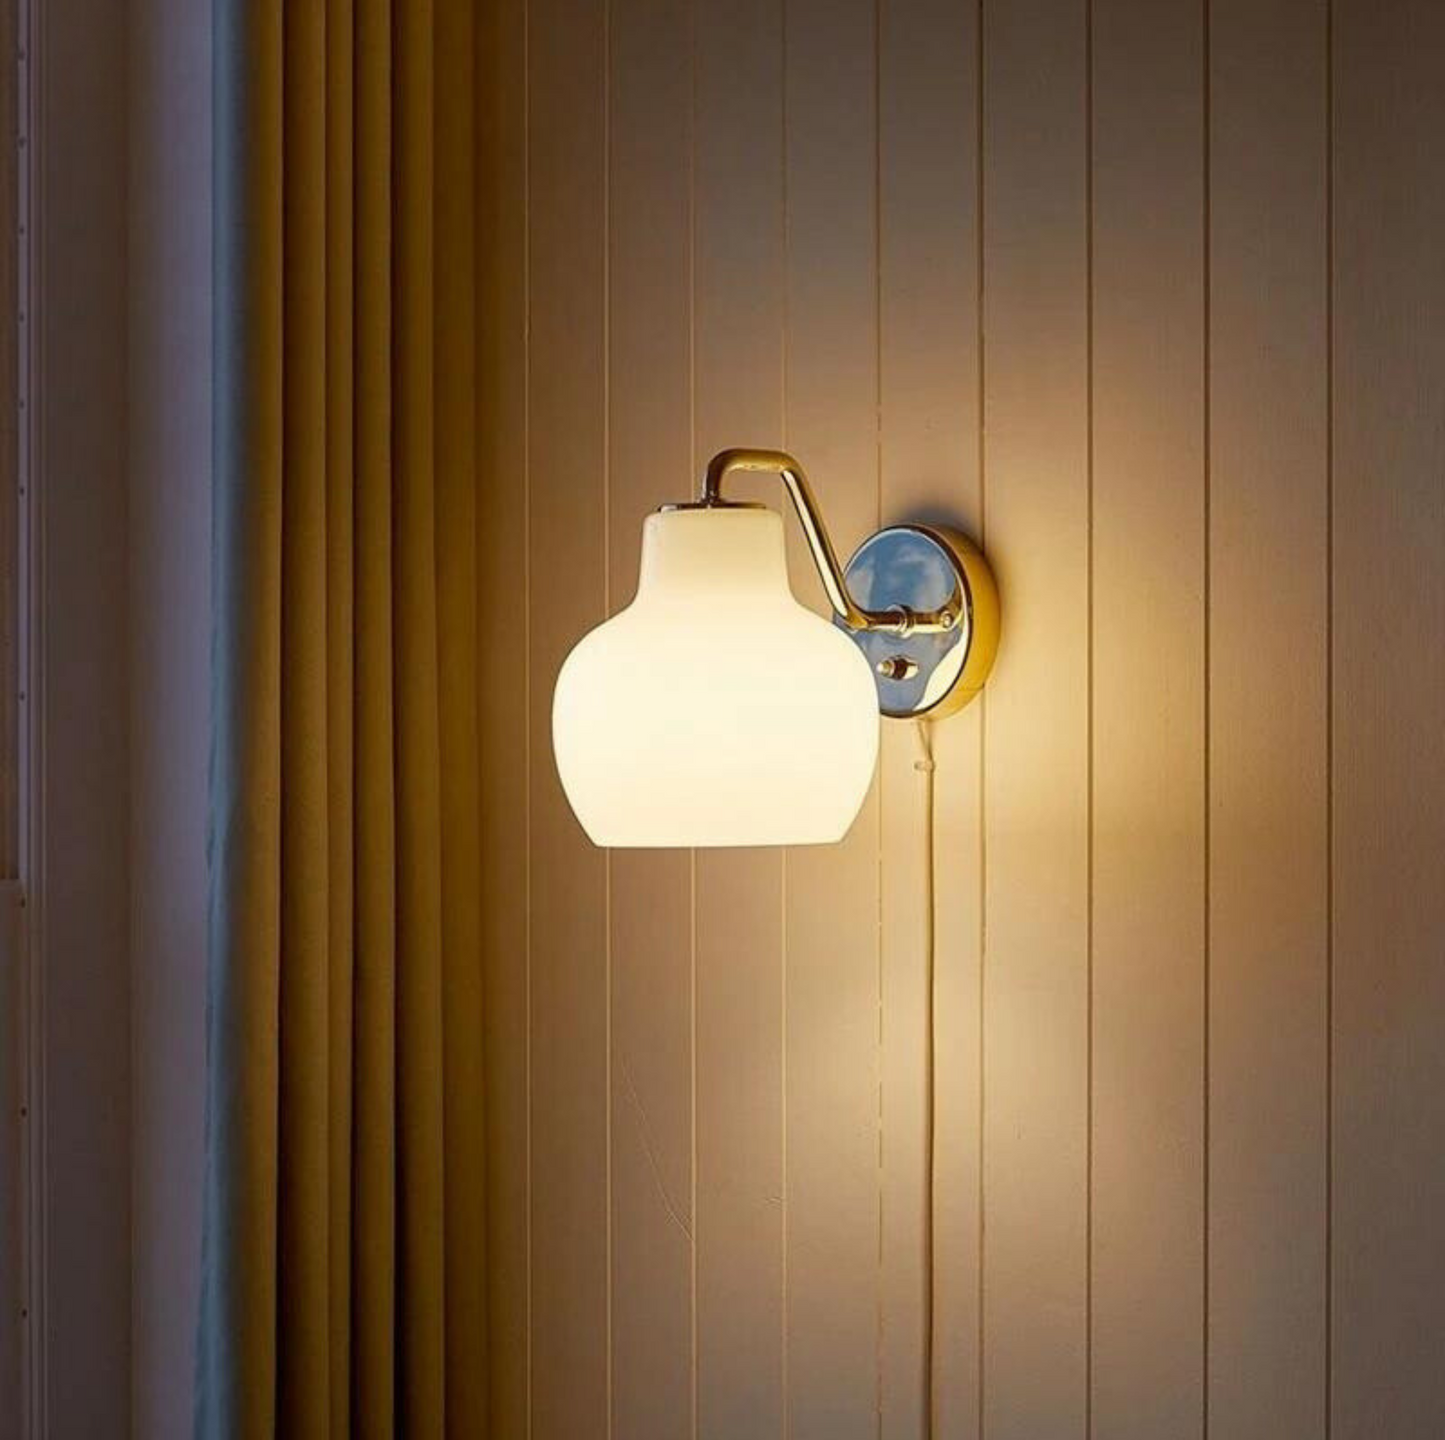 Iron Glass Bedroom Wall Lamp by Gloss (B5303)